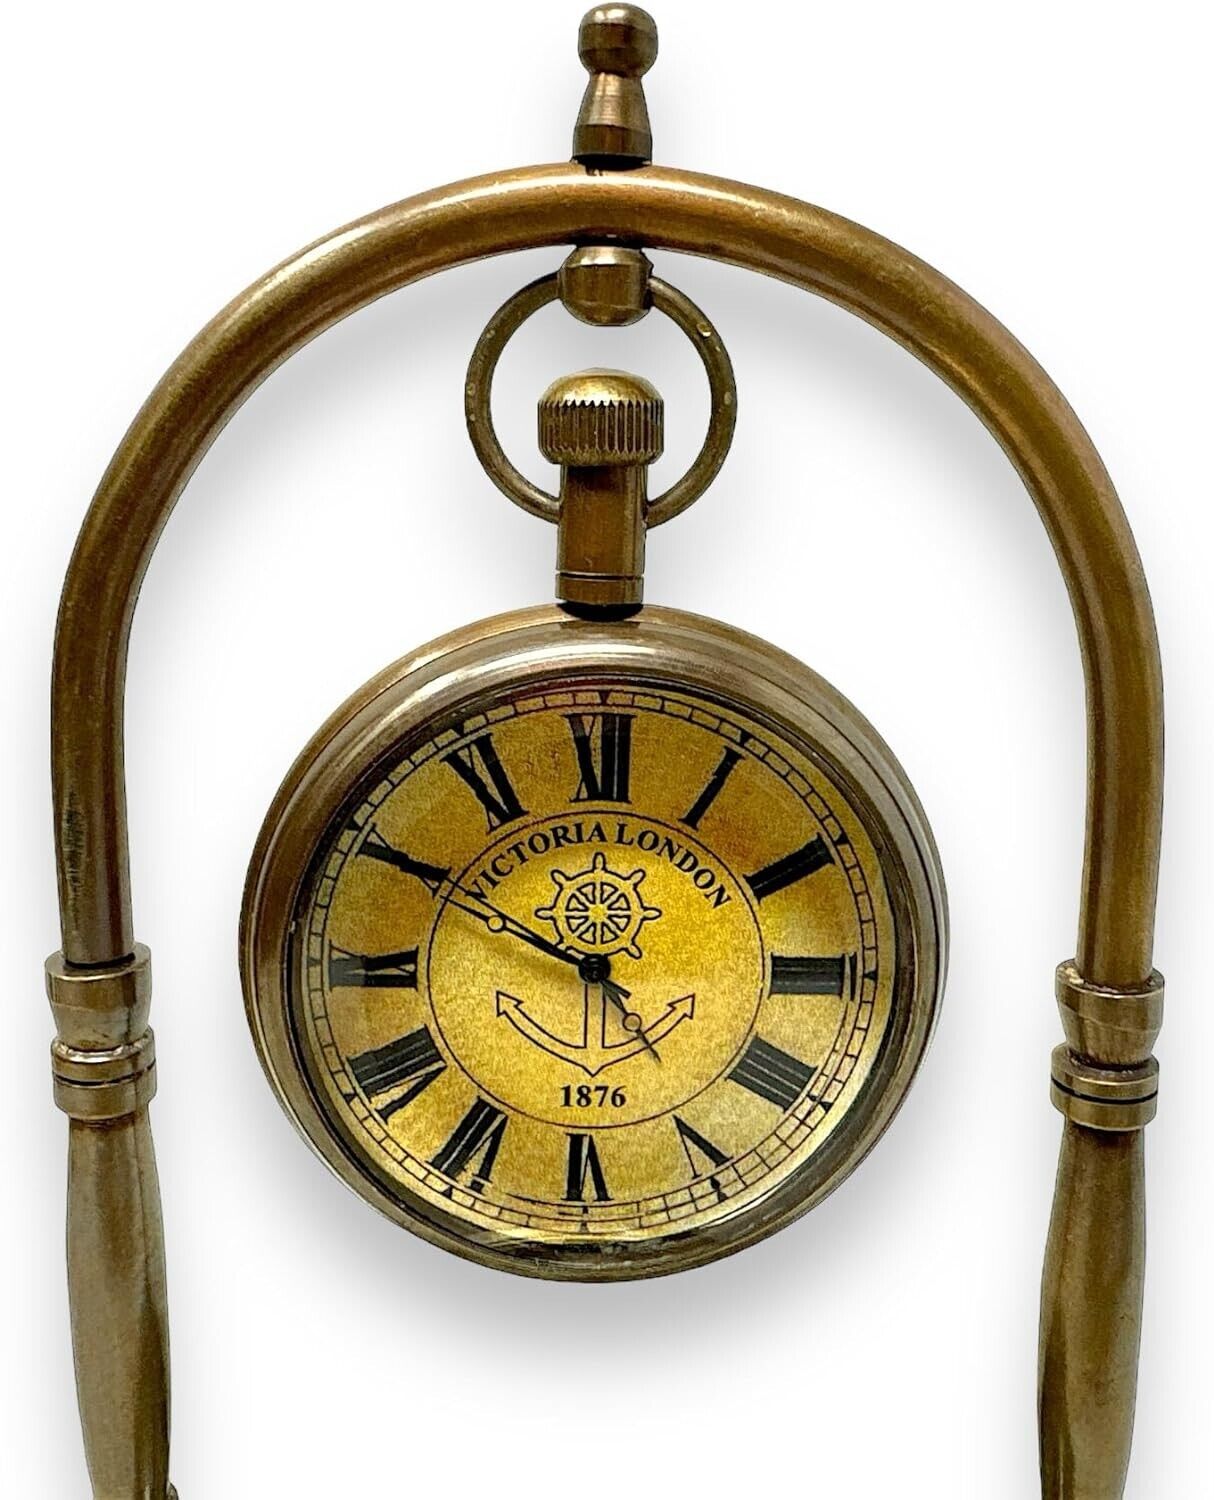 Brass Hanging Desk Clock Victoria London Pocket Watch Vintage Decorative Clock